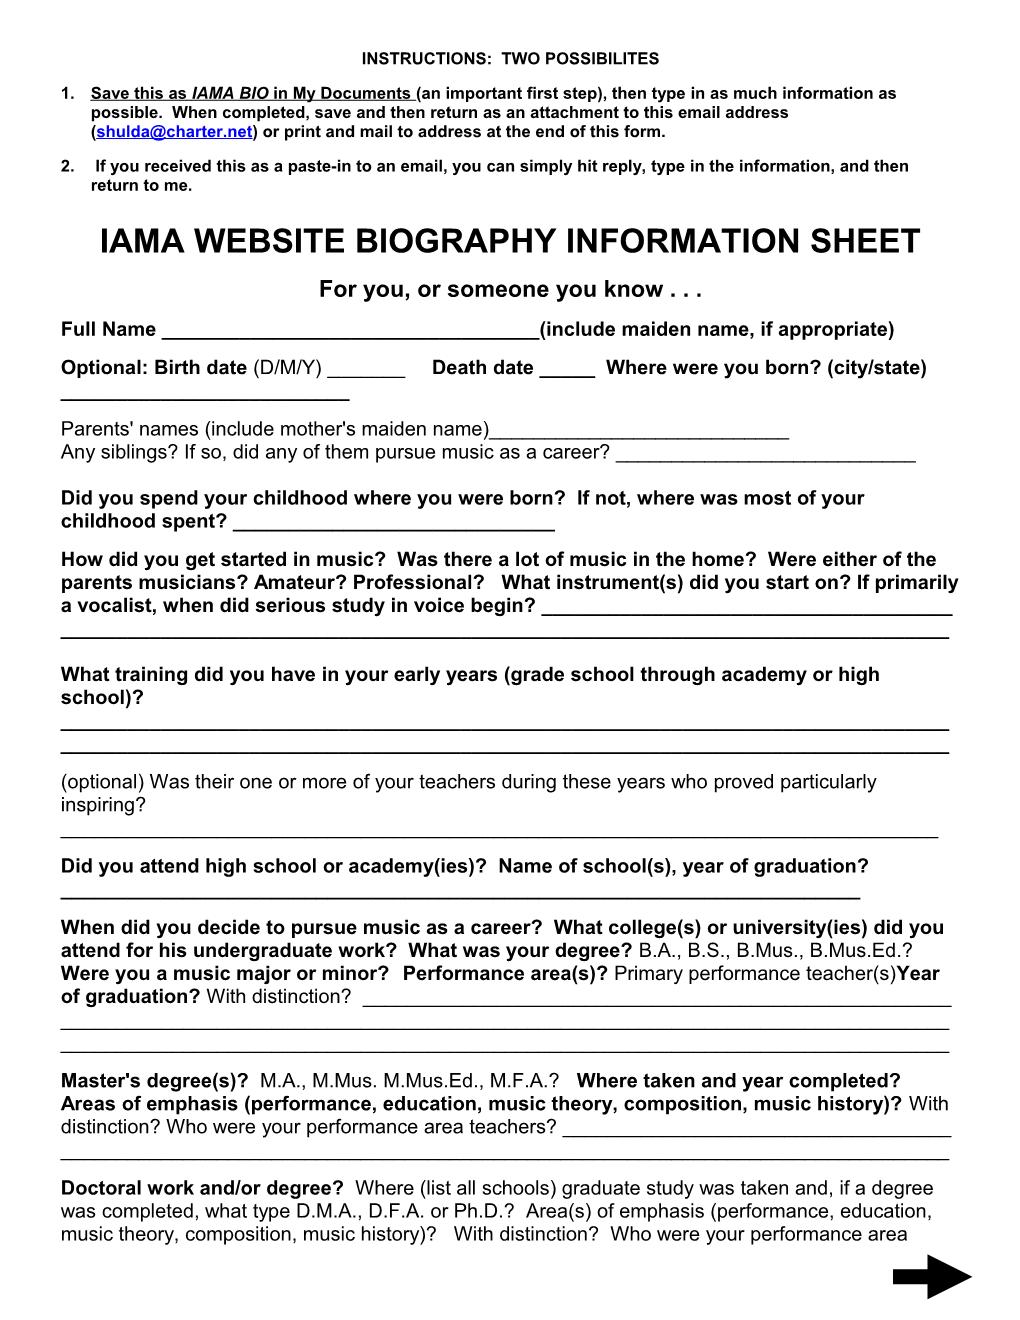 Iama Website Biography Worksheet